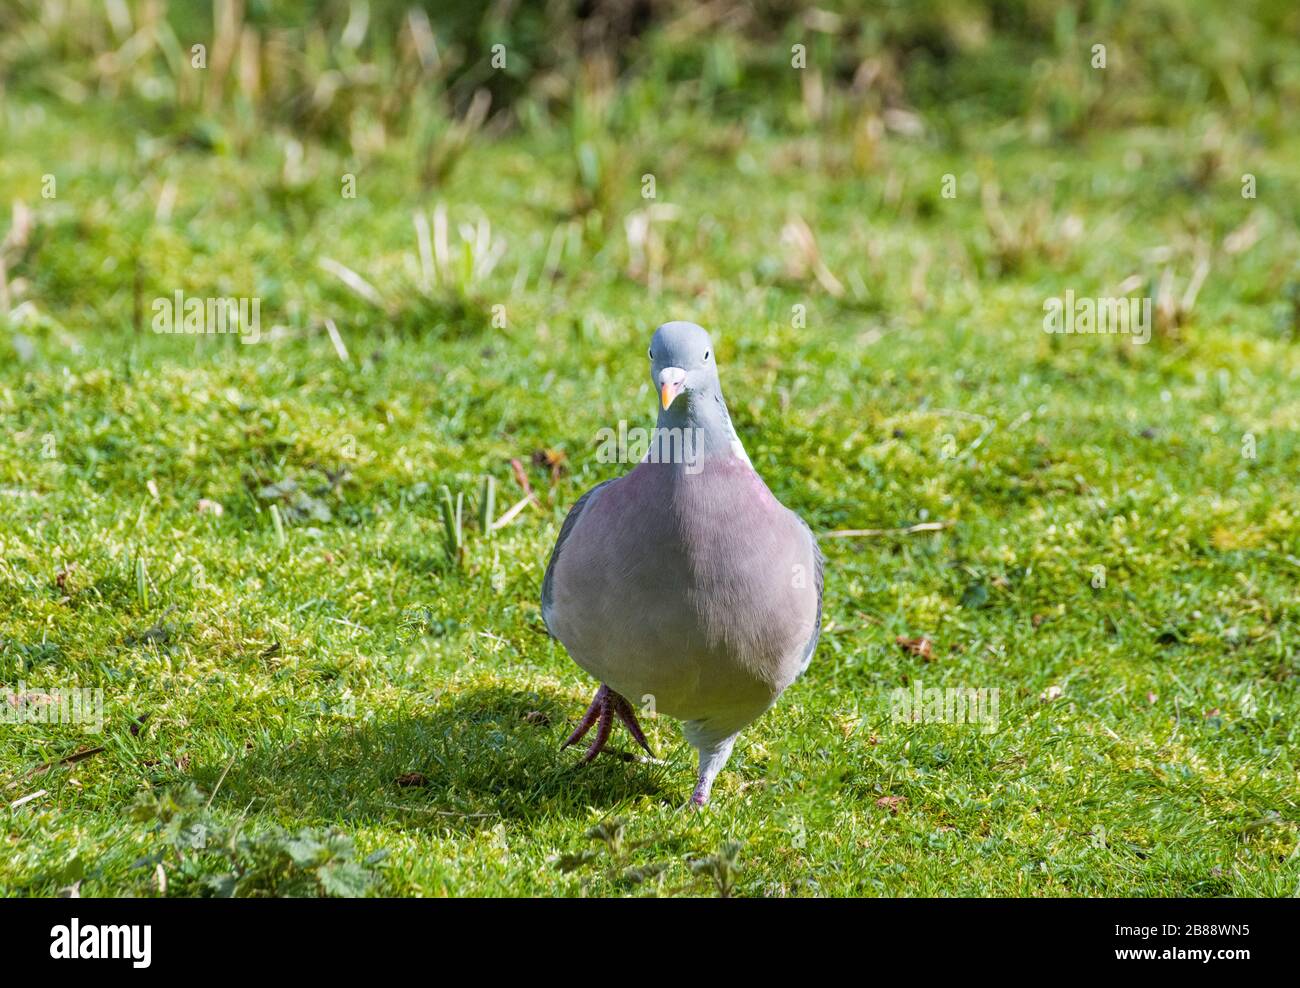 Common Wood Pigeon Columba palumbus seeking food on a grass meadow. Stock Photo